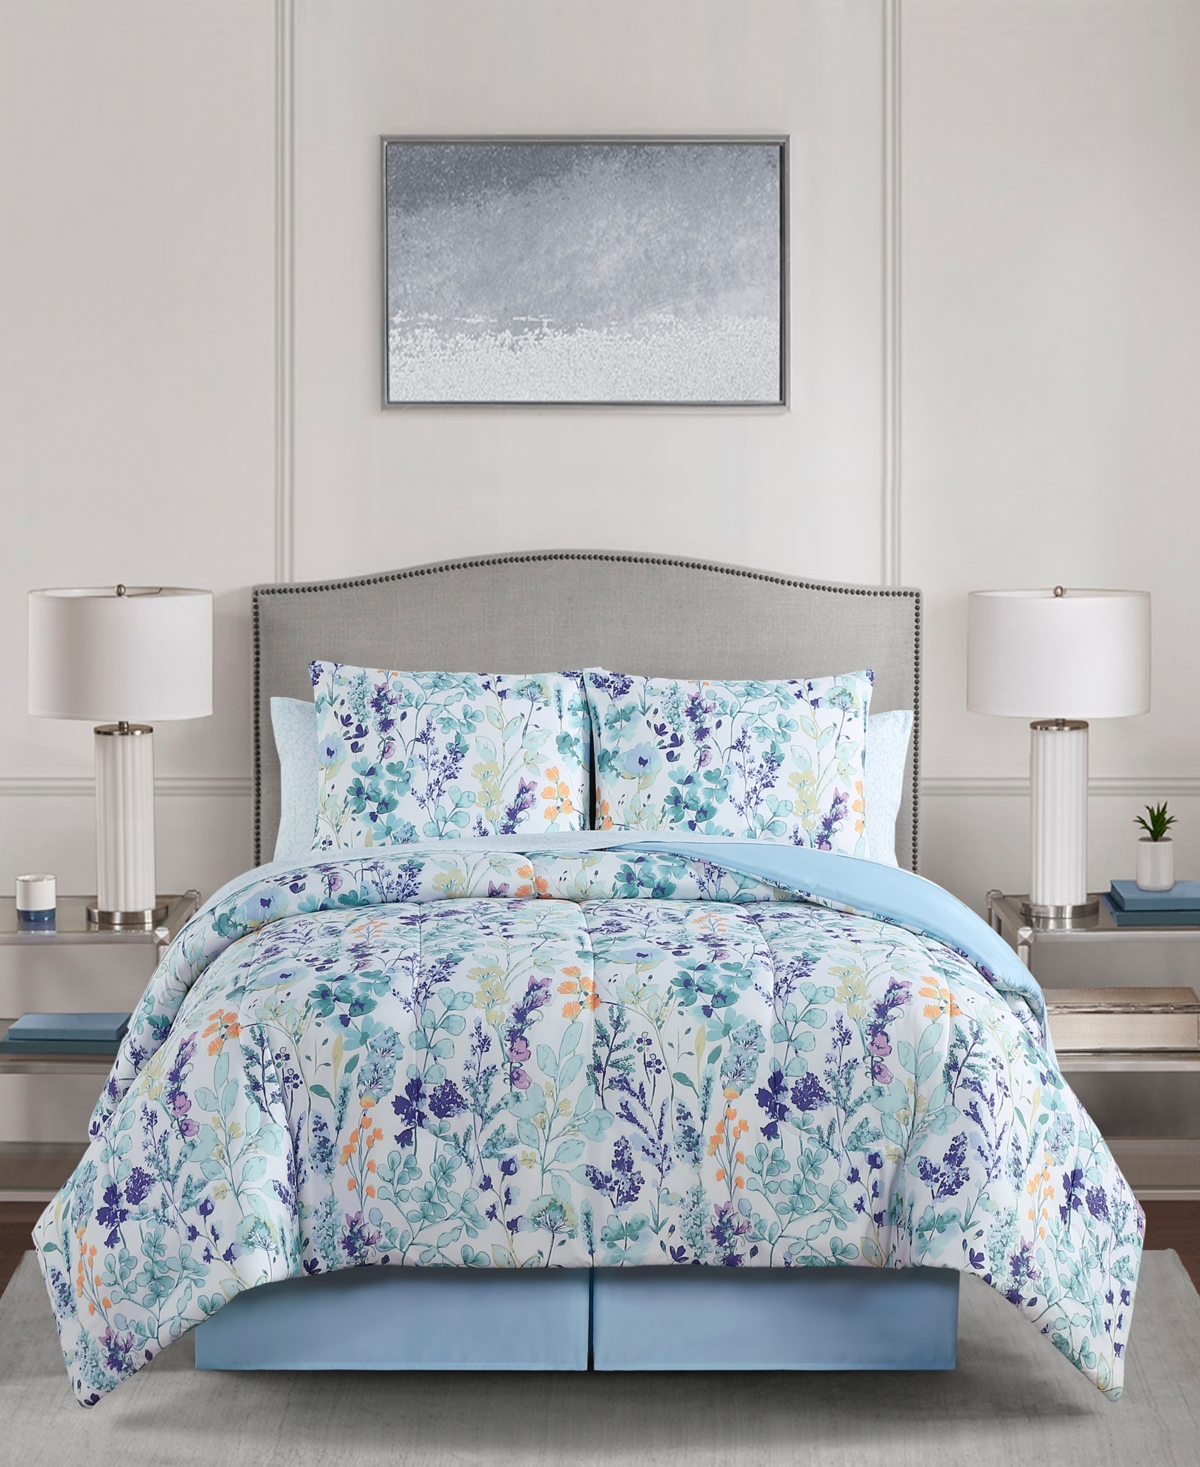 Keeco Maria 6-piece Twin Xl Comforter Set Bedding In Aqua